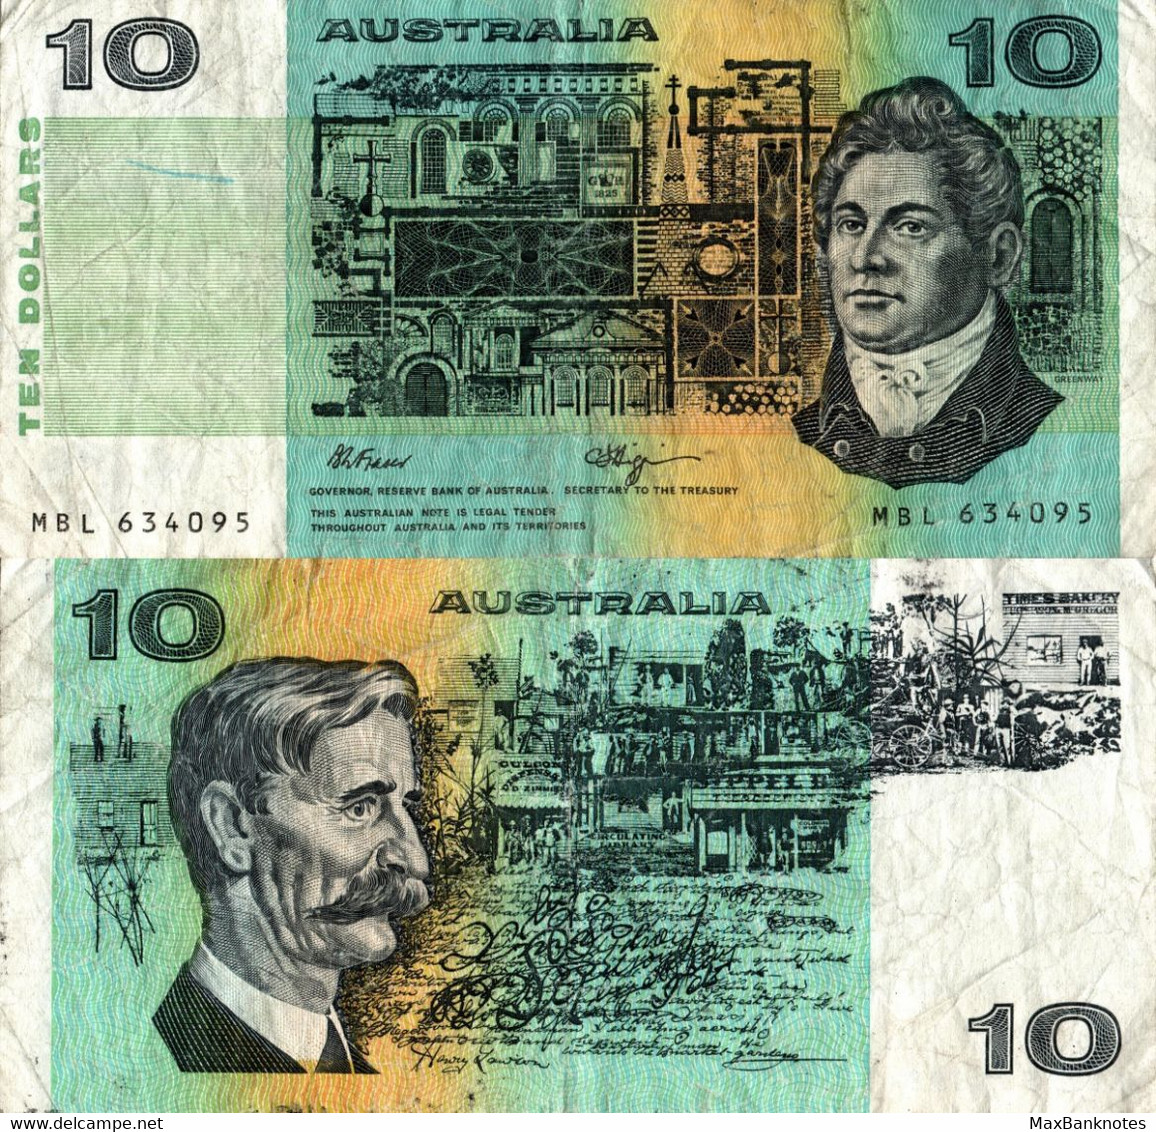 Australia / 10 Dollars / 1974 / P-45(f) / FI - 1974-94 Australia Reserve Bank (papier)